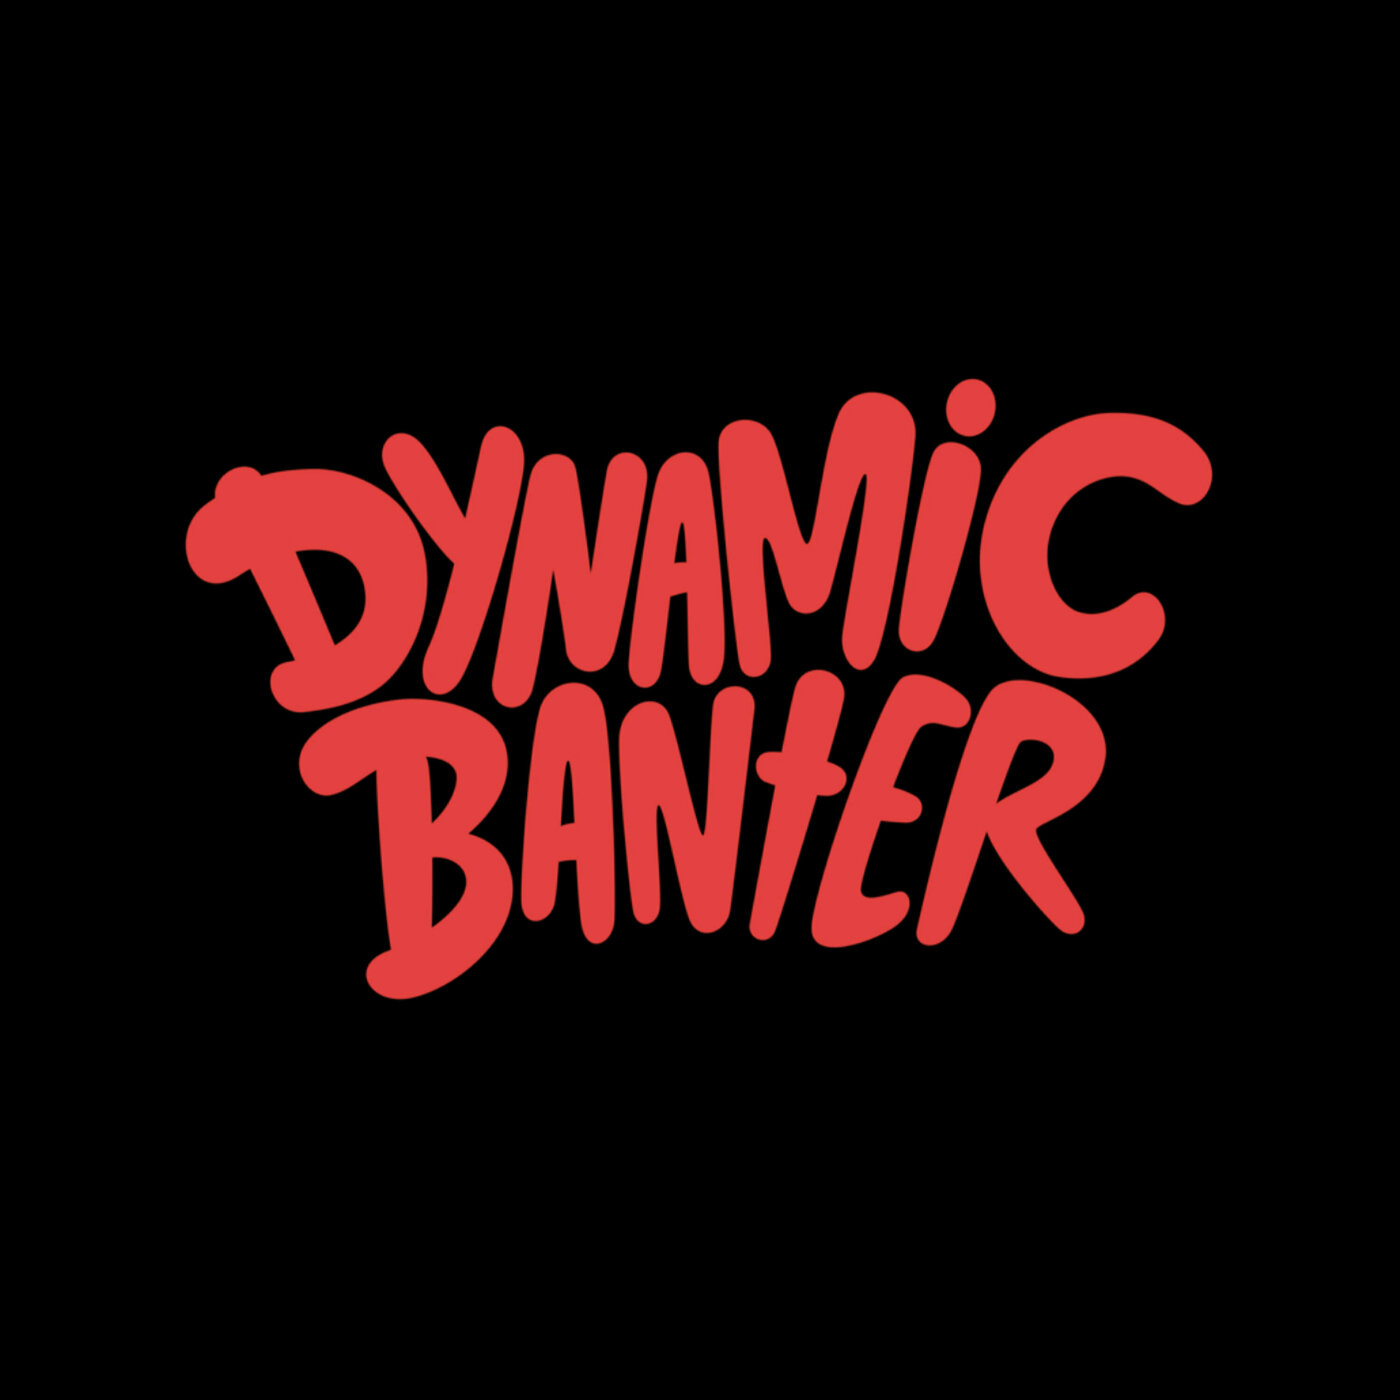 Episode 197 - Remote Banter